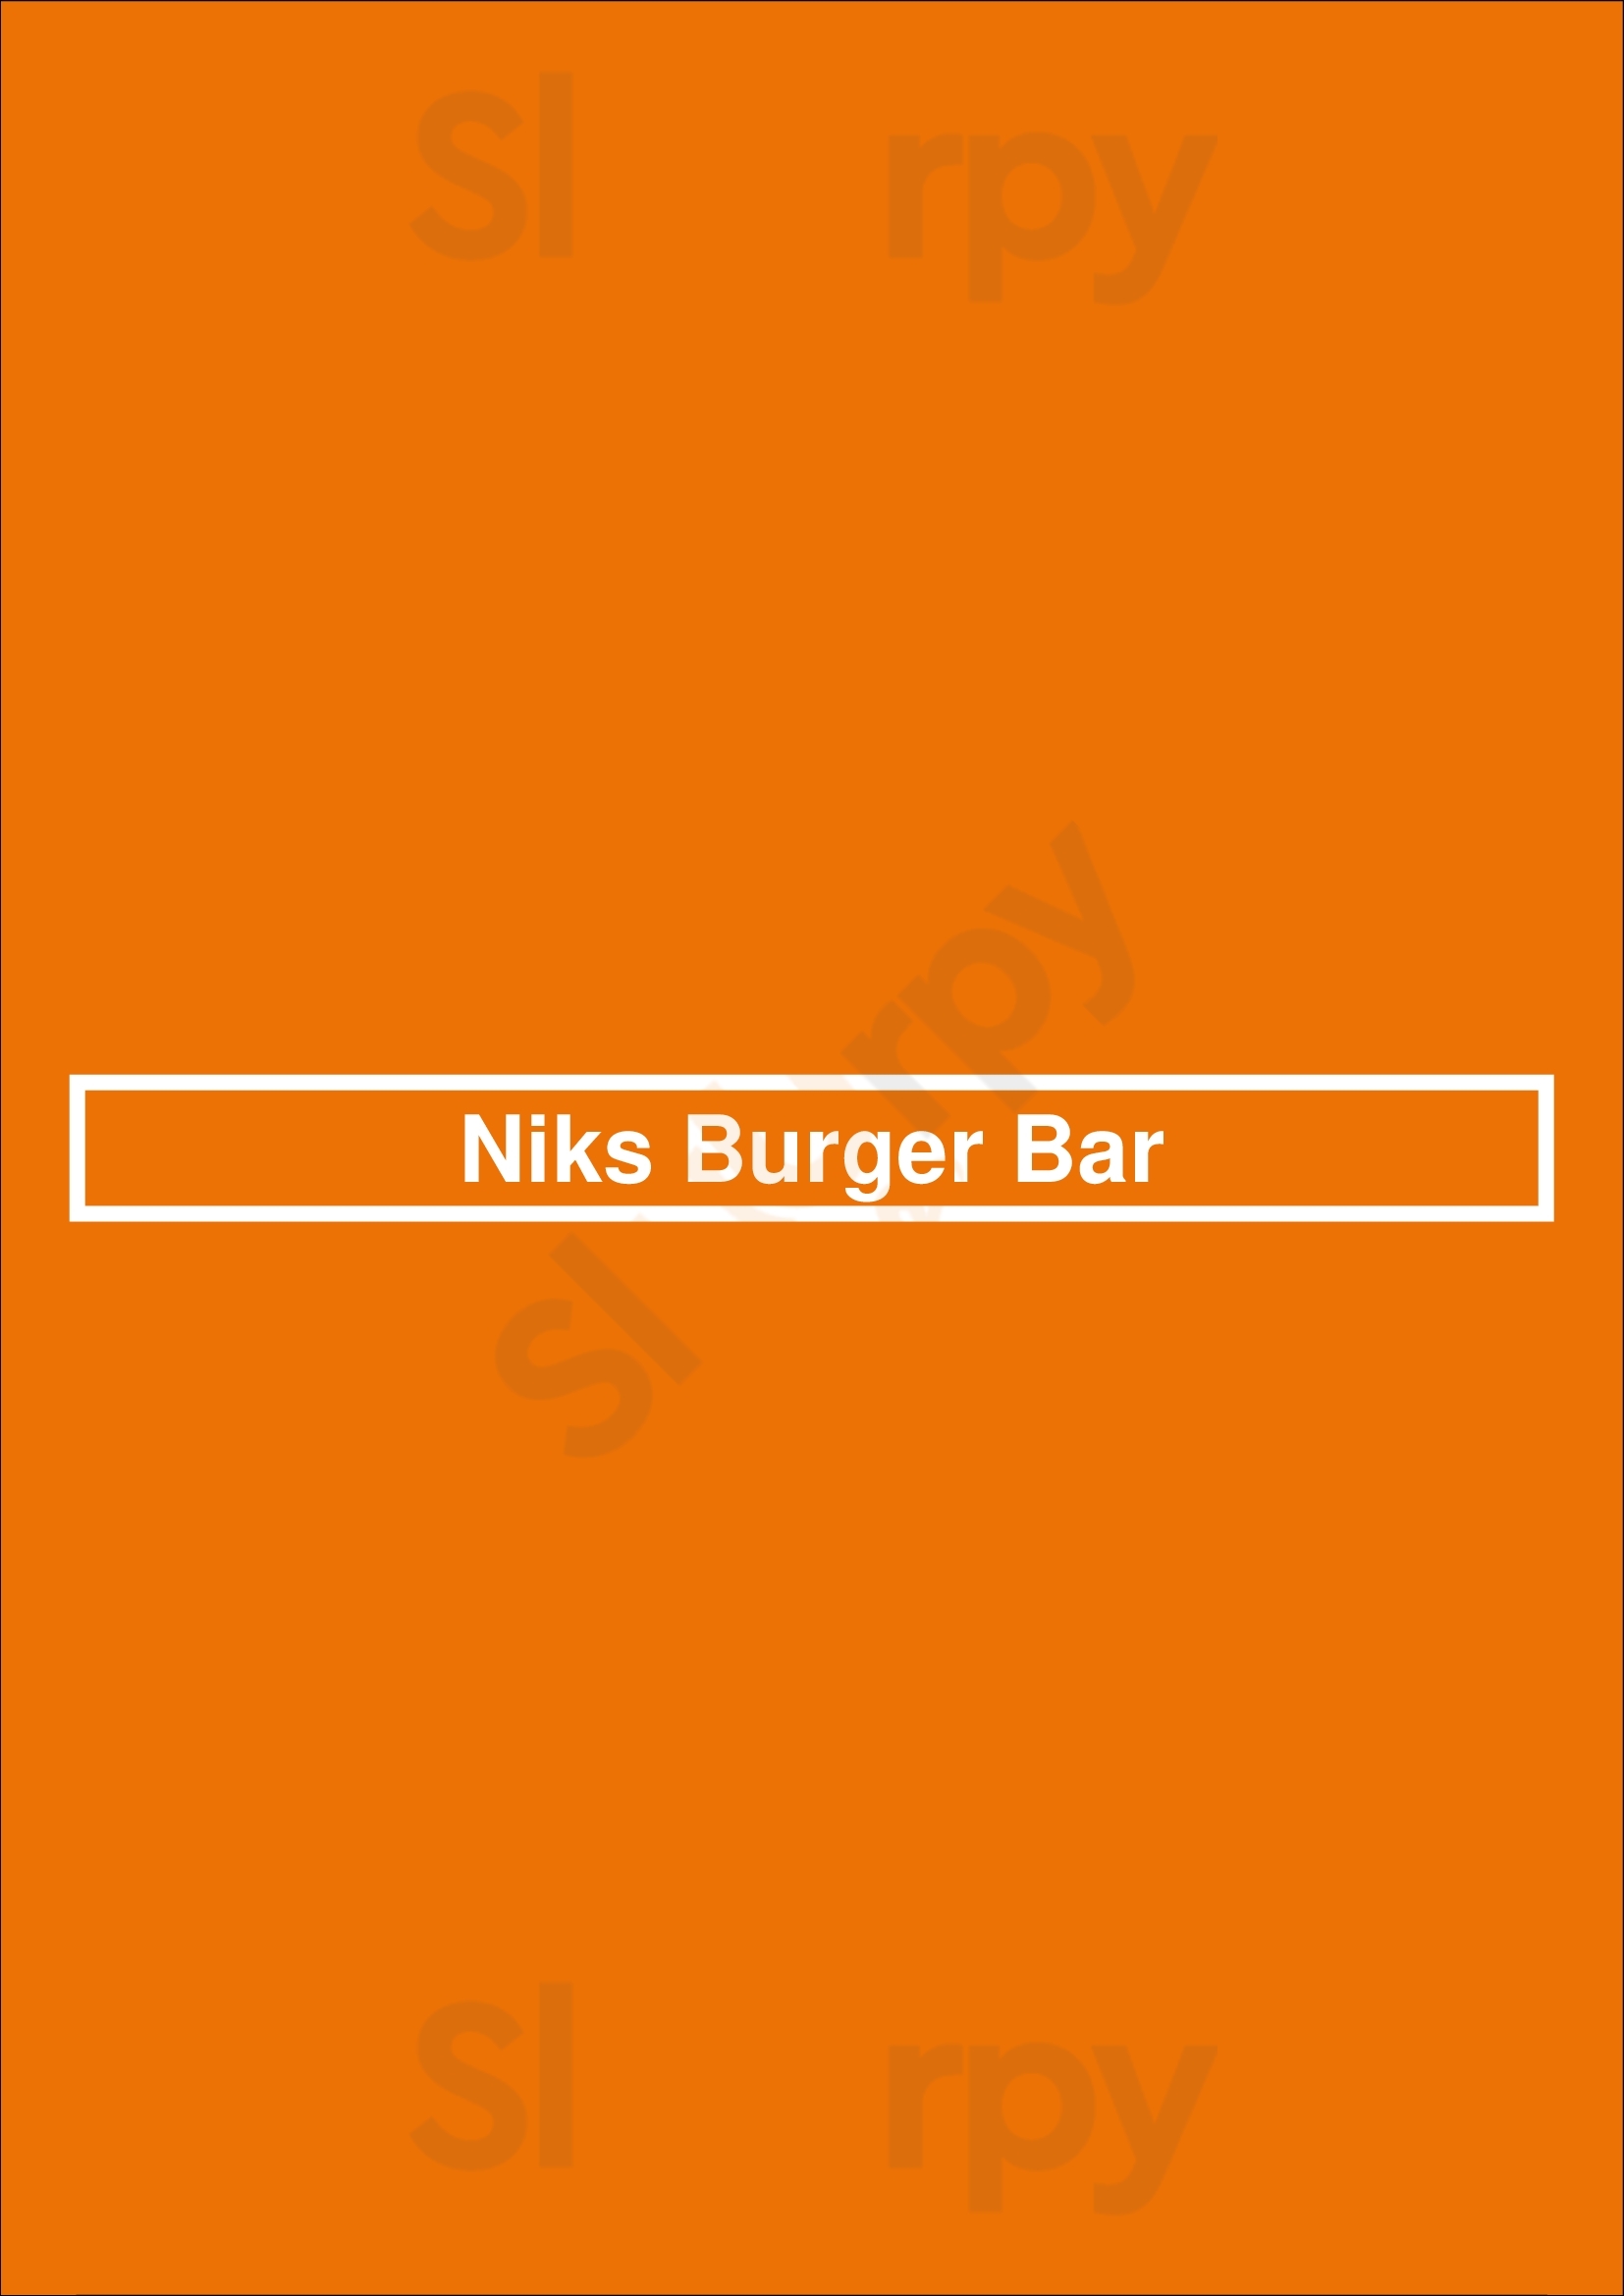 Niks Burger Bar São Paulo Menu - 1